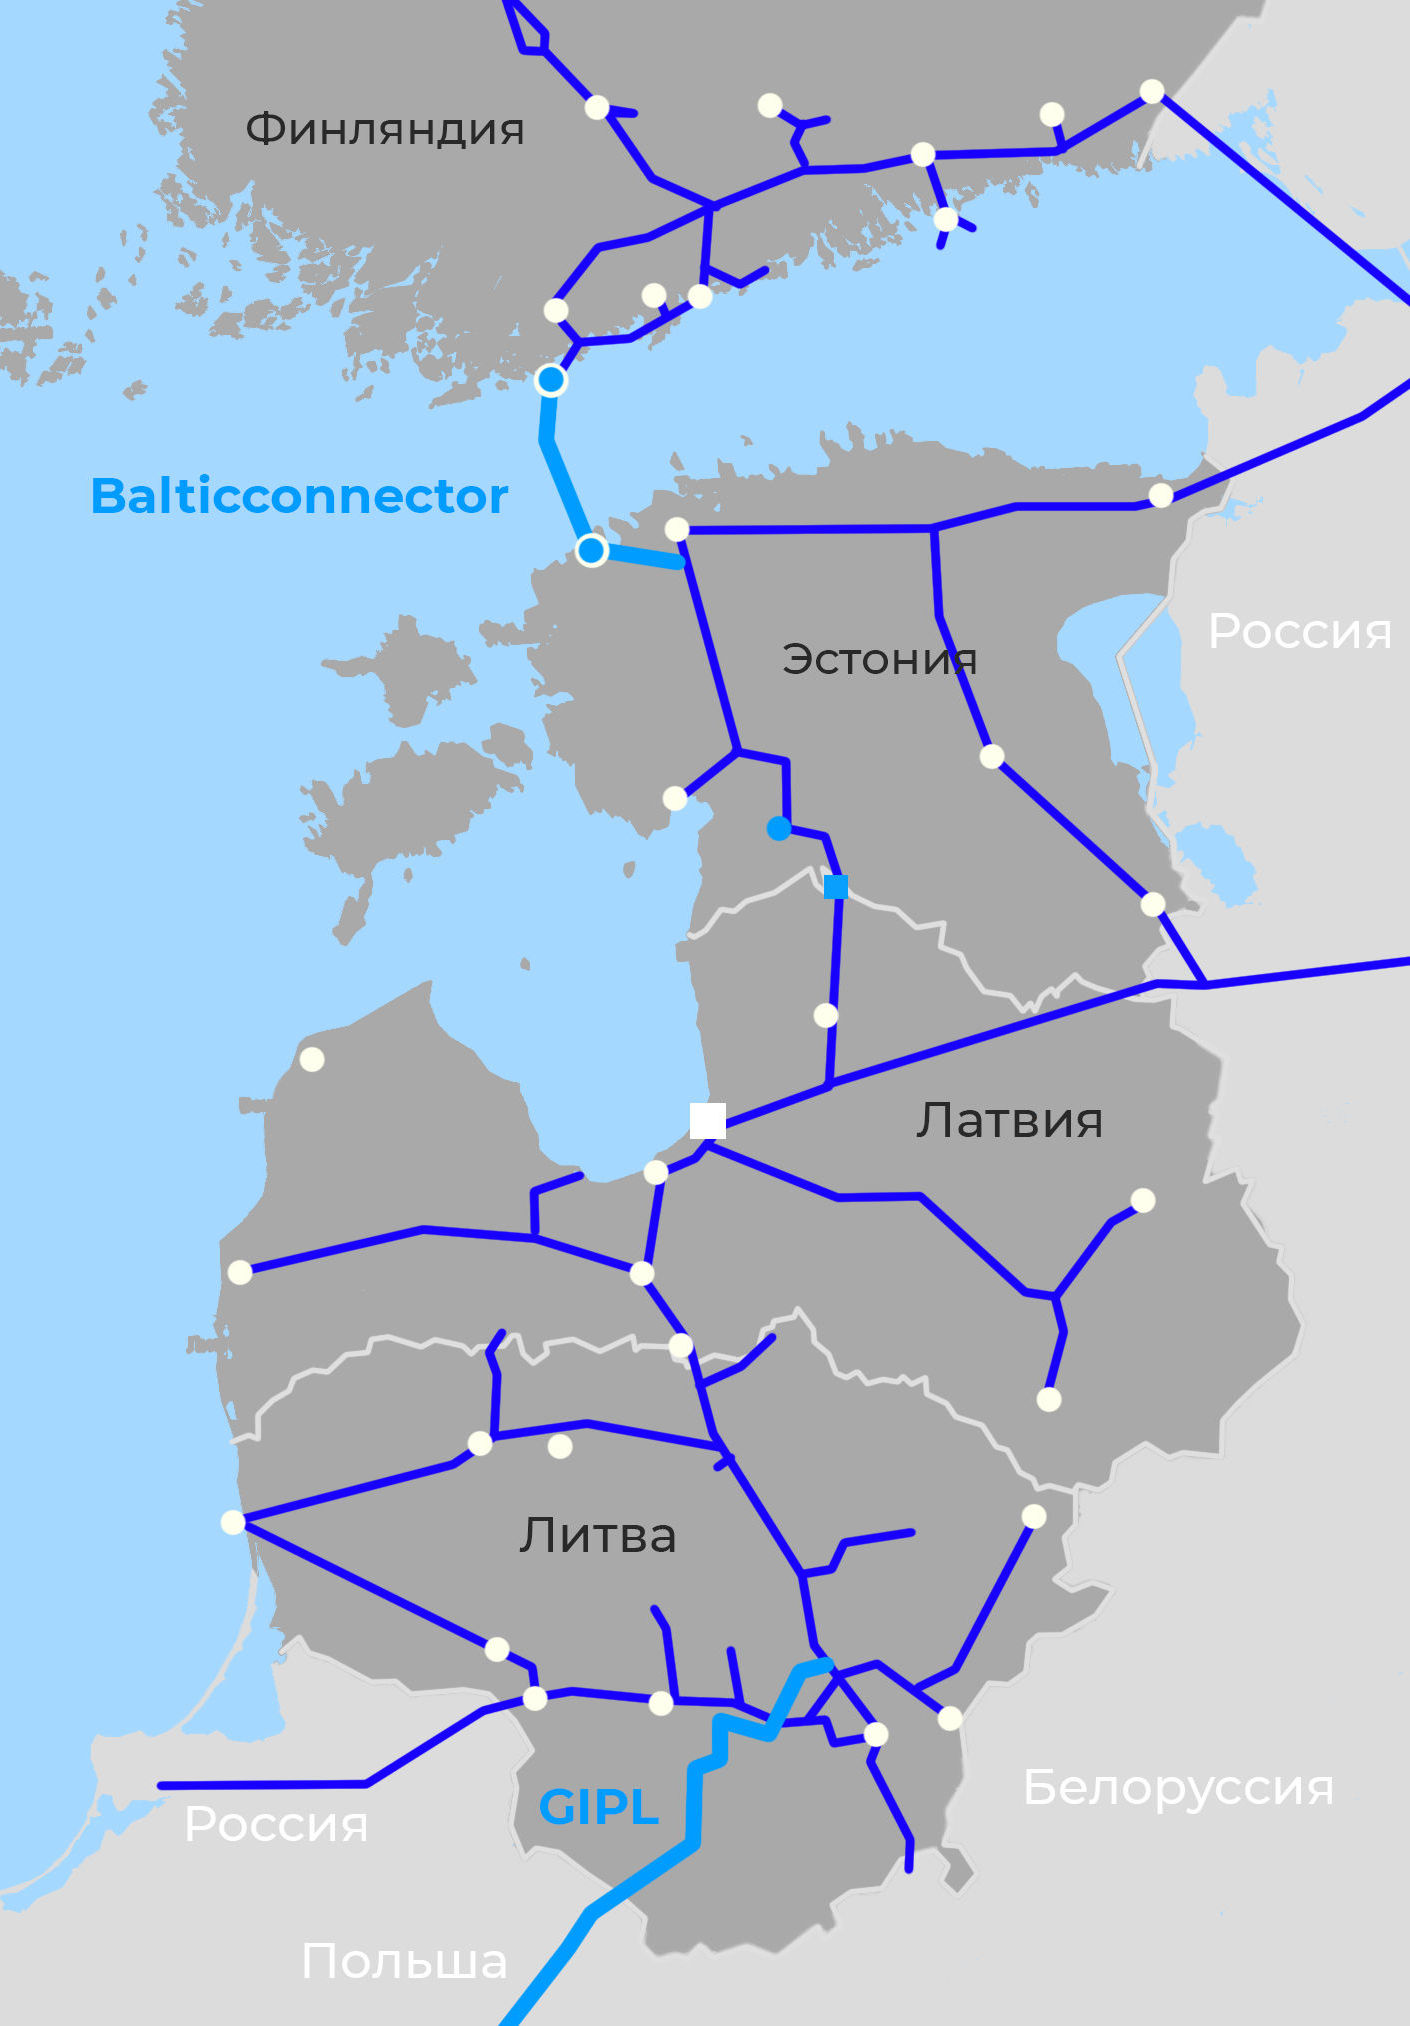 Balticconnector